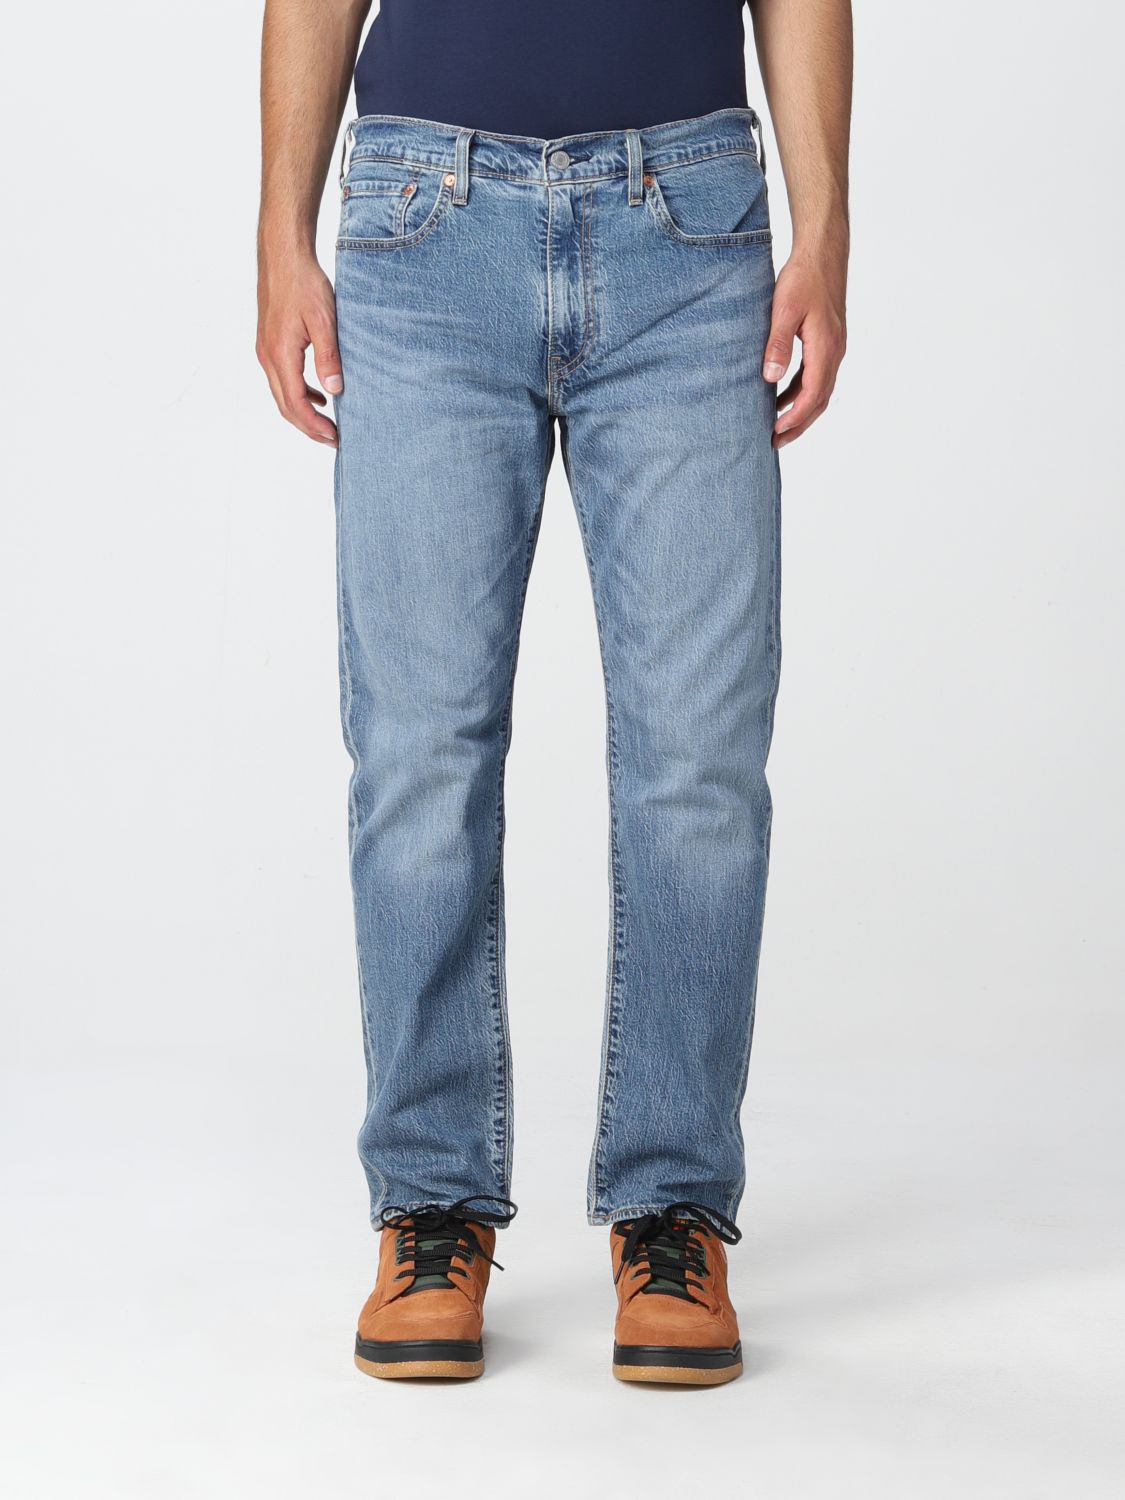 LEVI'S: 502 denim jeans - Denim | Levi's jeans 295071110 online on ...